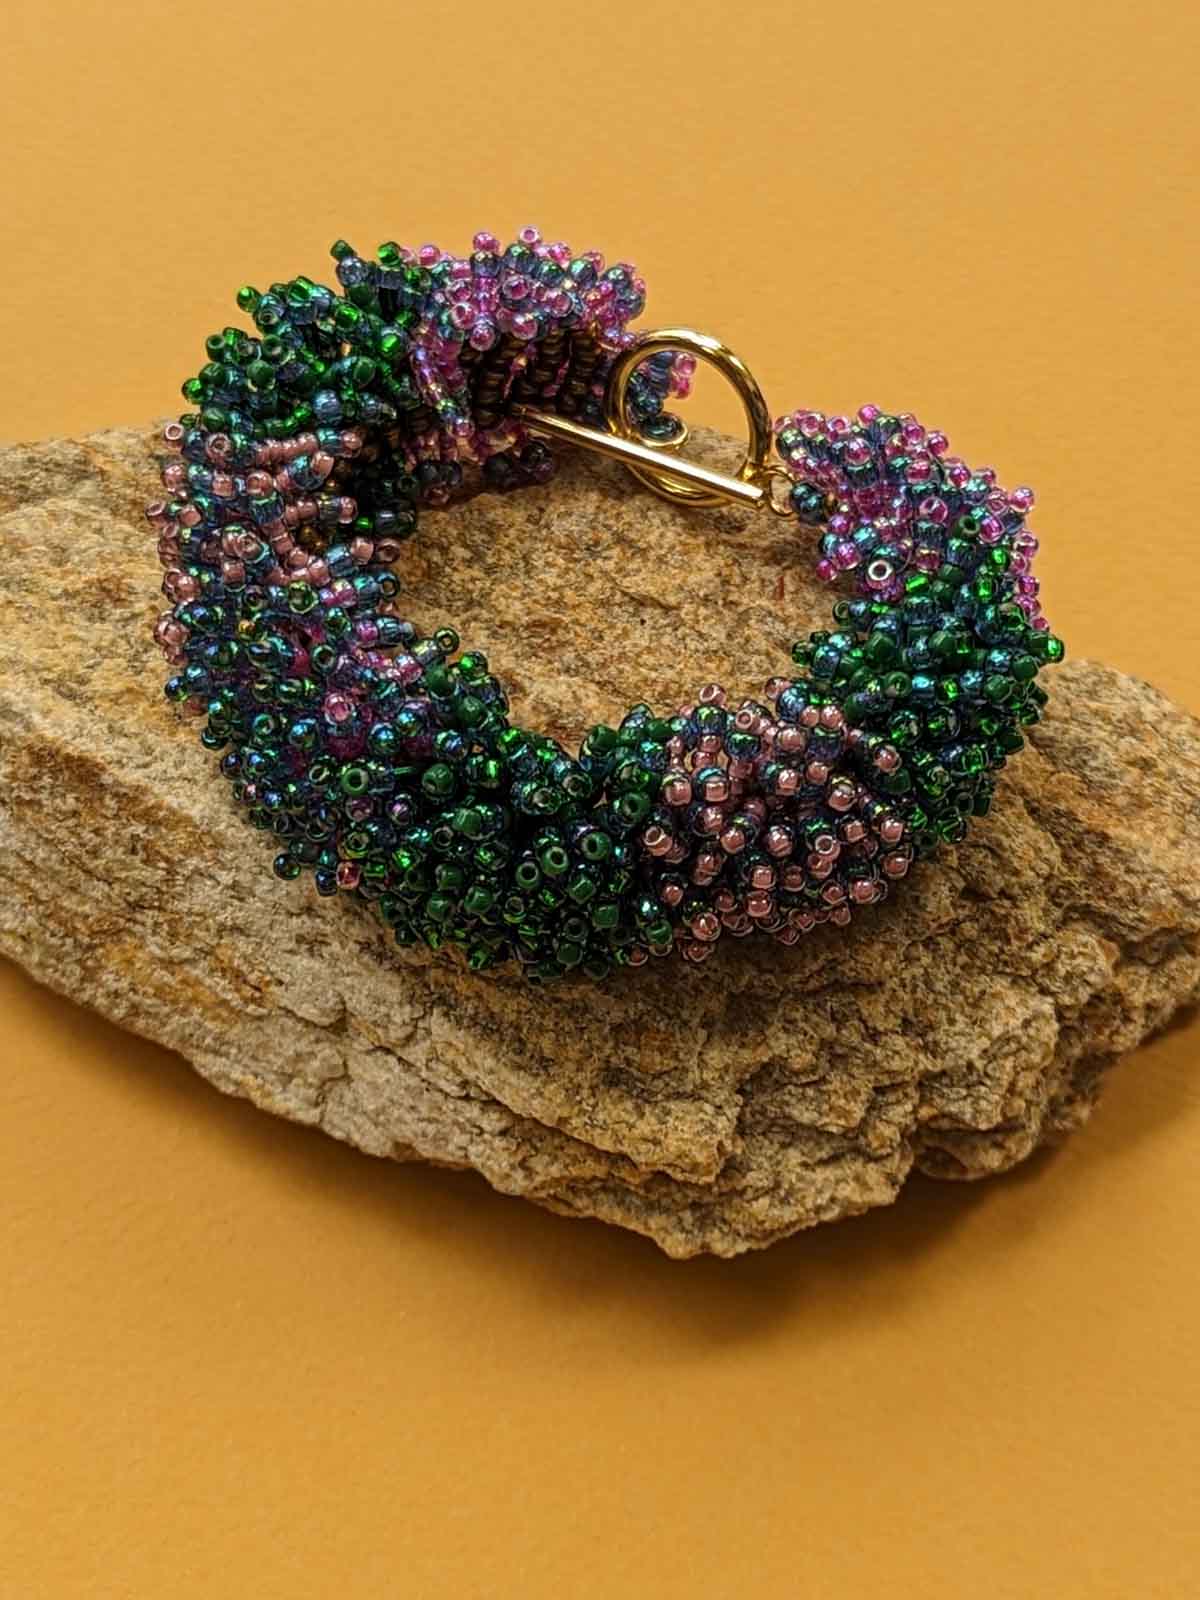 Coral Bracelet